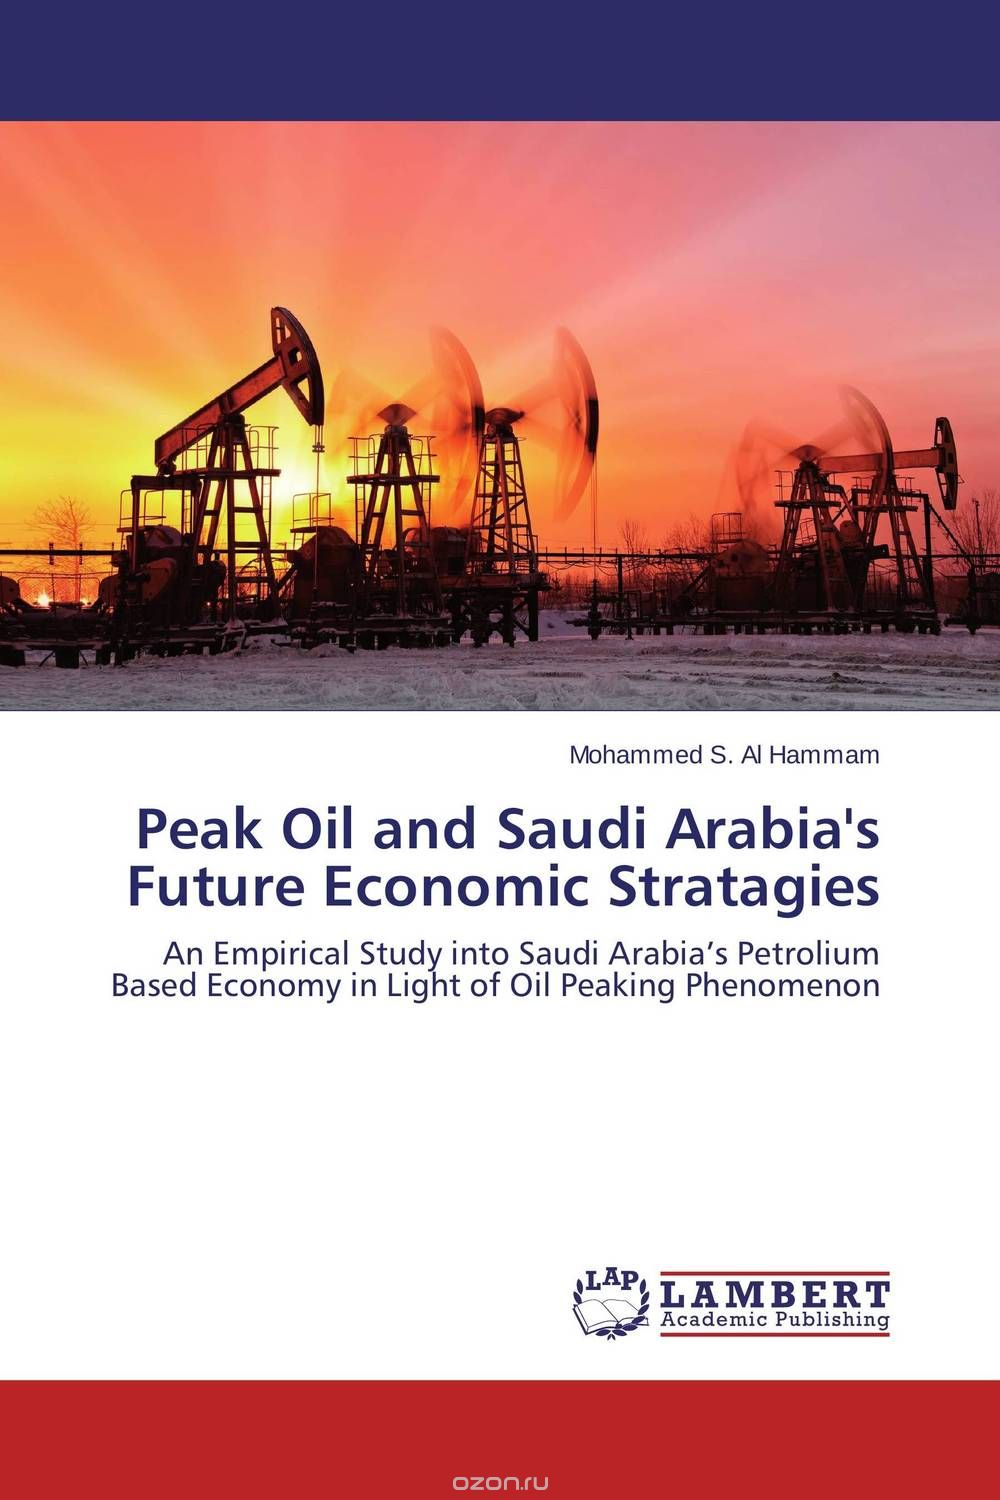 Скачать книгу "Peak Oil and Saudi Arabia's Future Economic Stratagies"